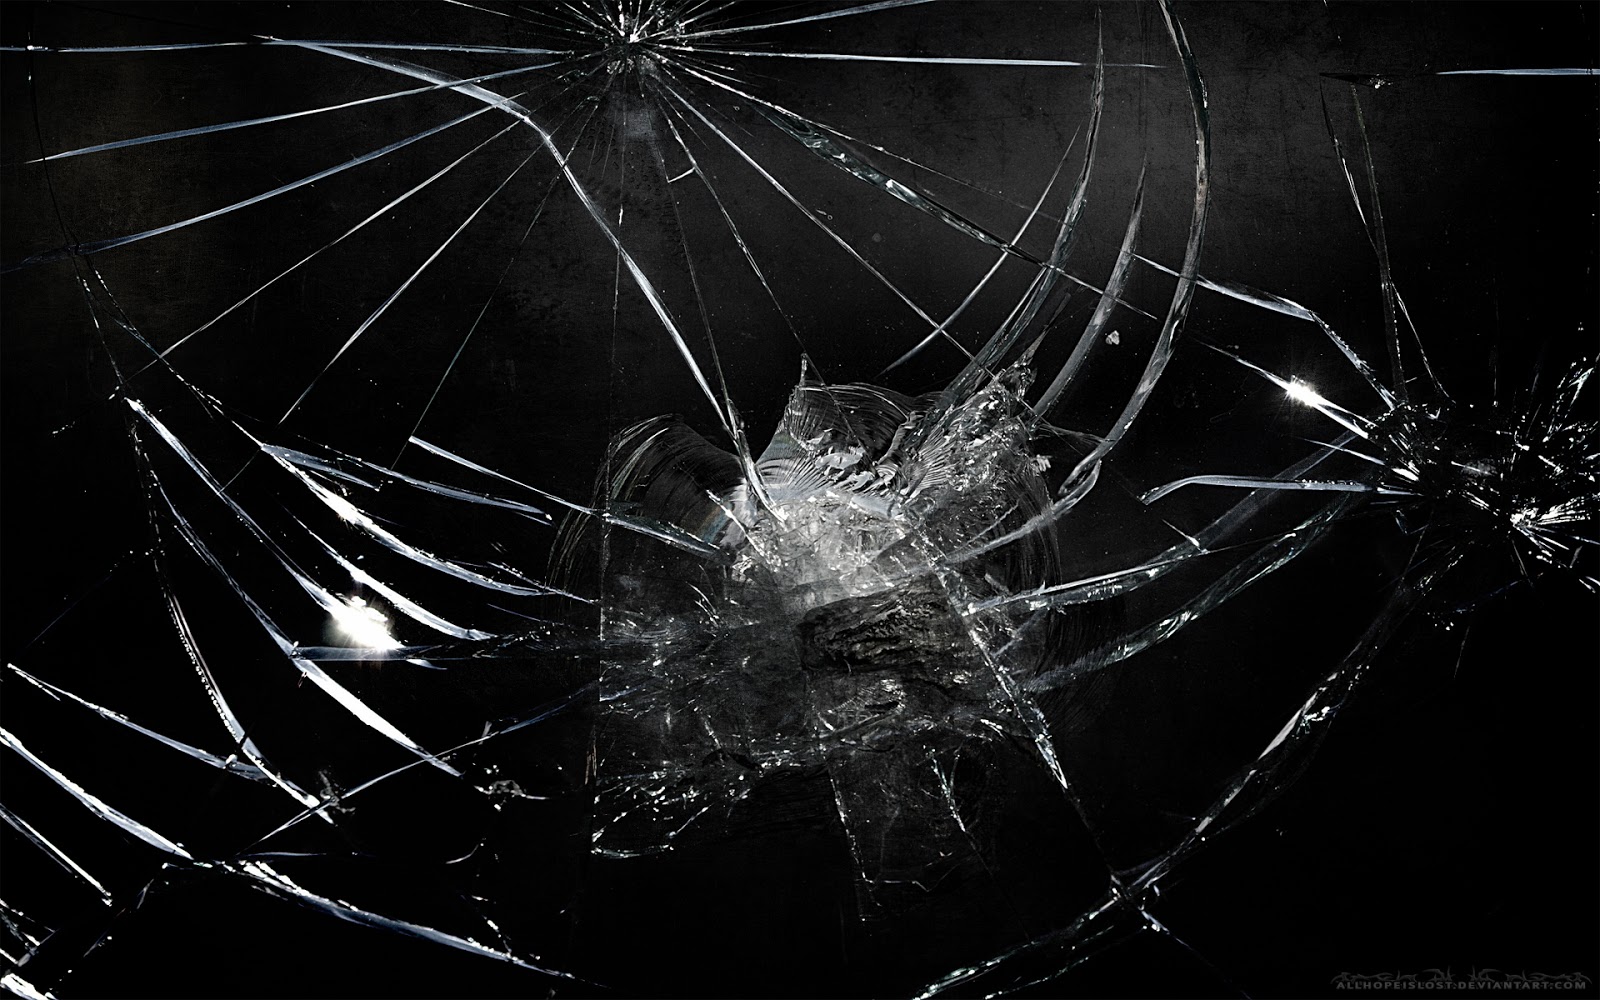 500 Broken Glass Pictures  Download Free Images on Unsplash